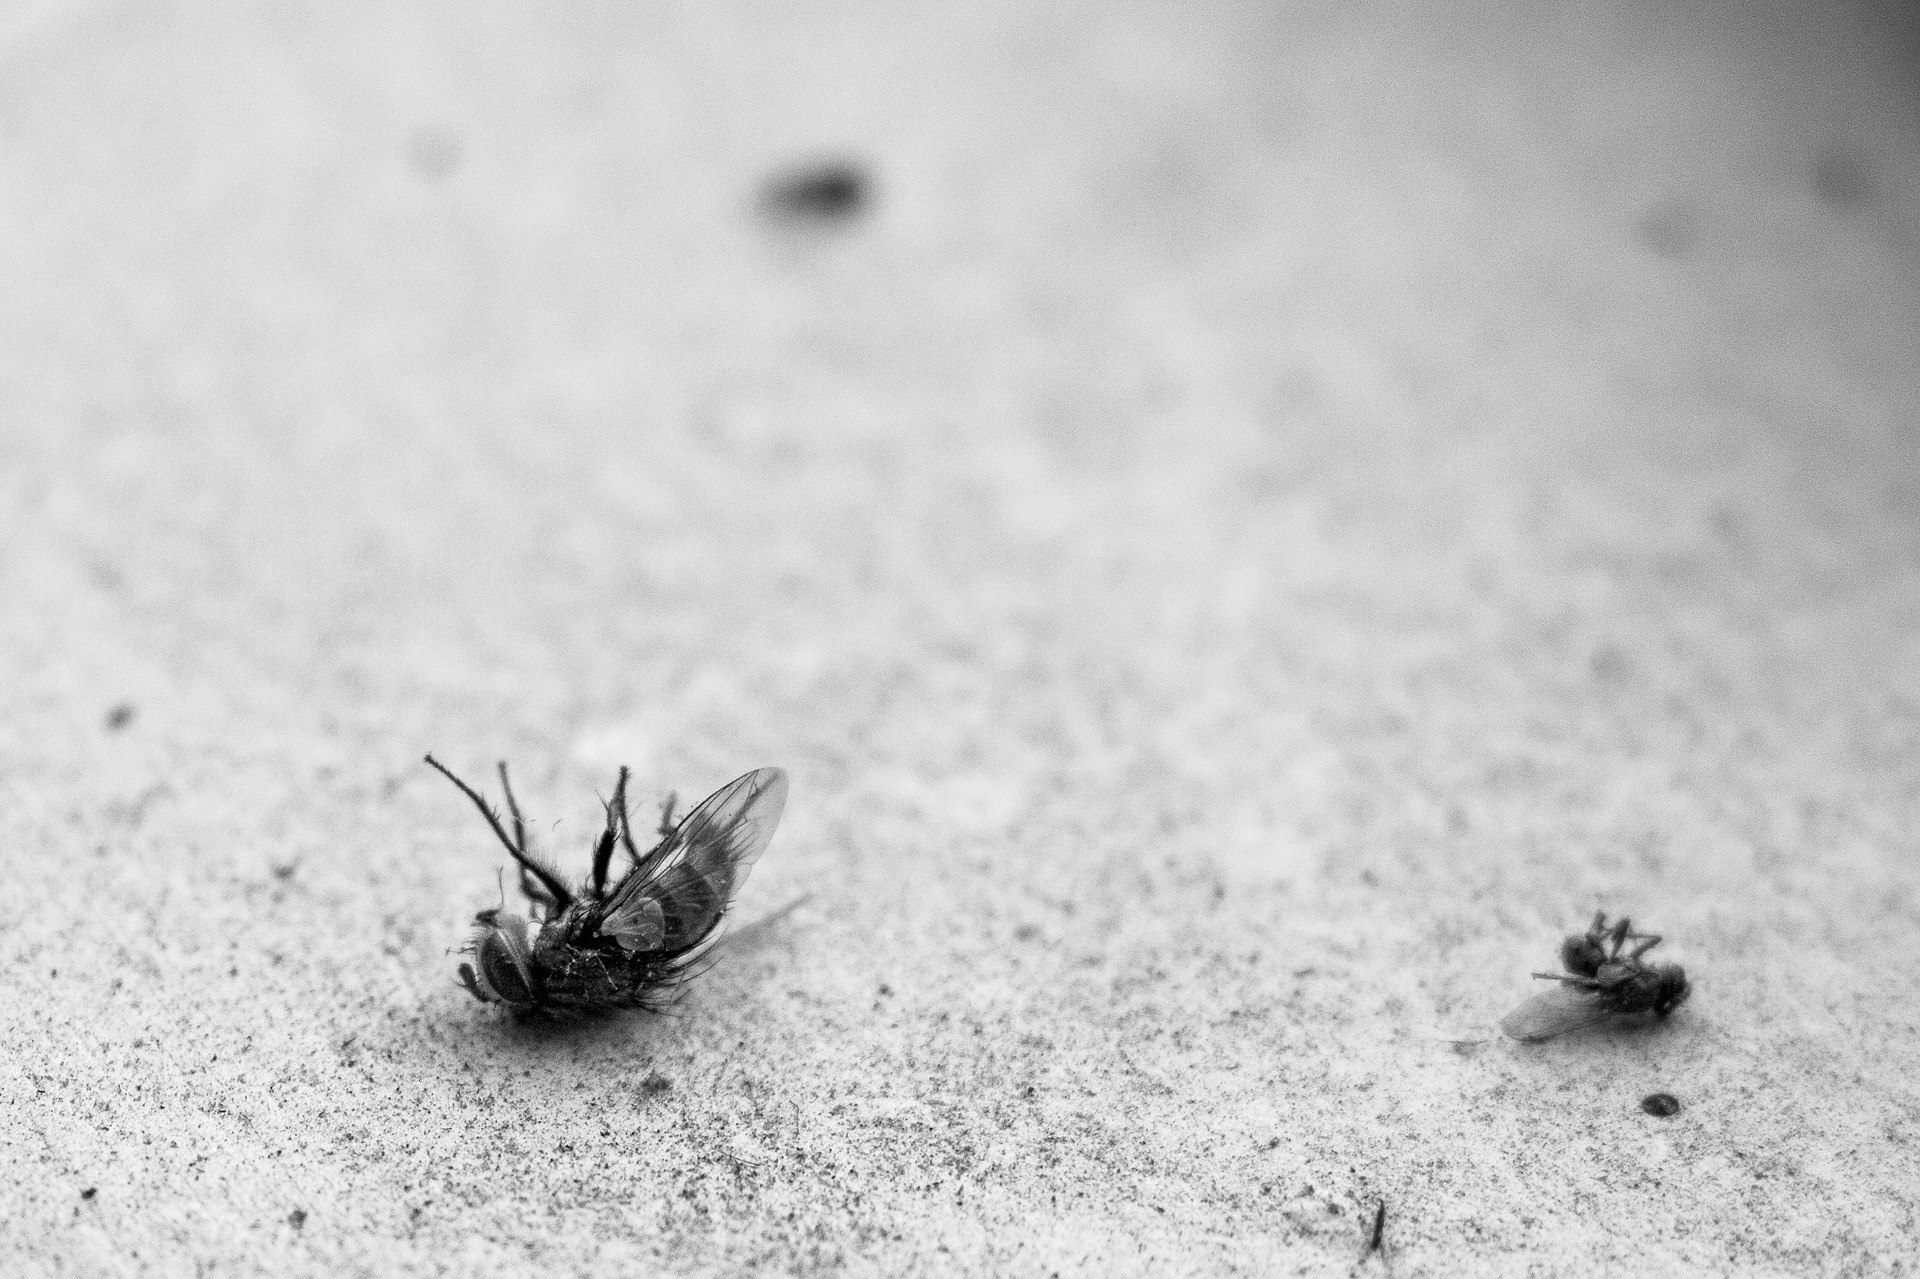 Dead flies to illustrate a Czech weather idiom about falling flies in heat.